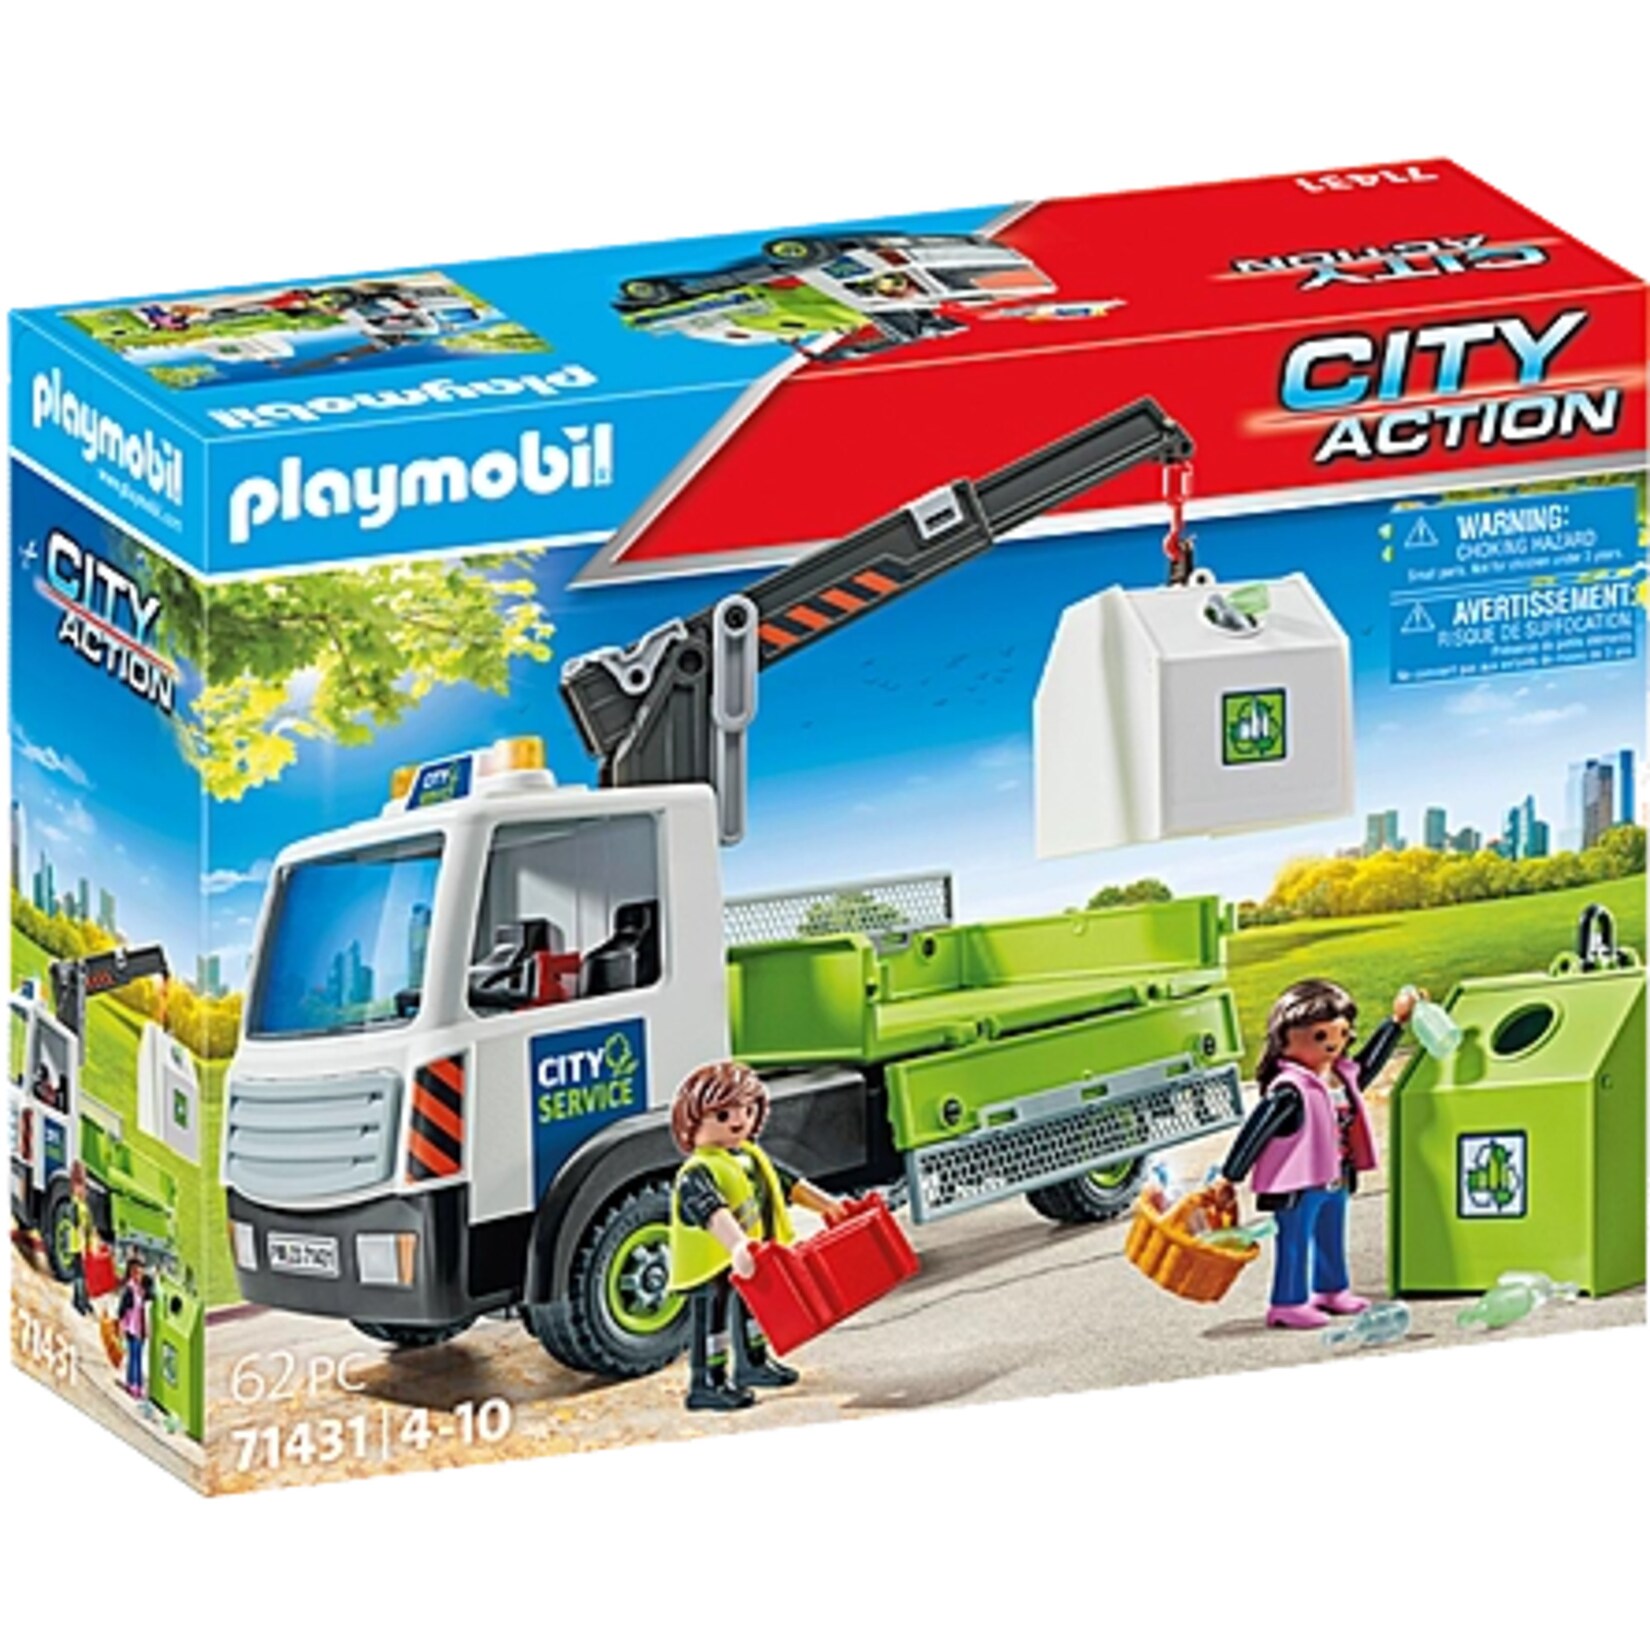 PLAYMOBIL Konstruktionsspielzeug City Action Altglas-LKW mit Container